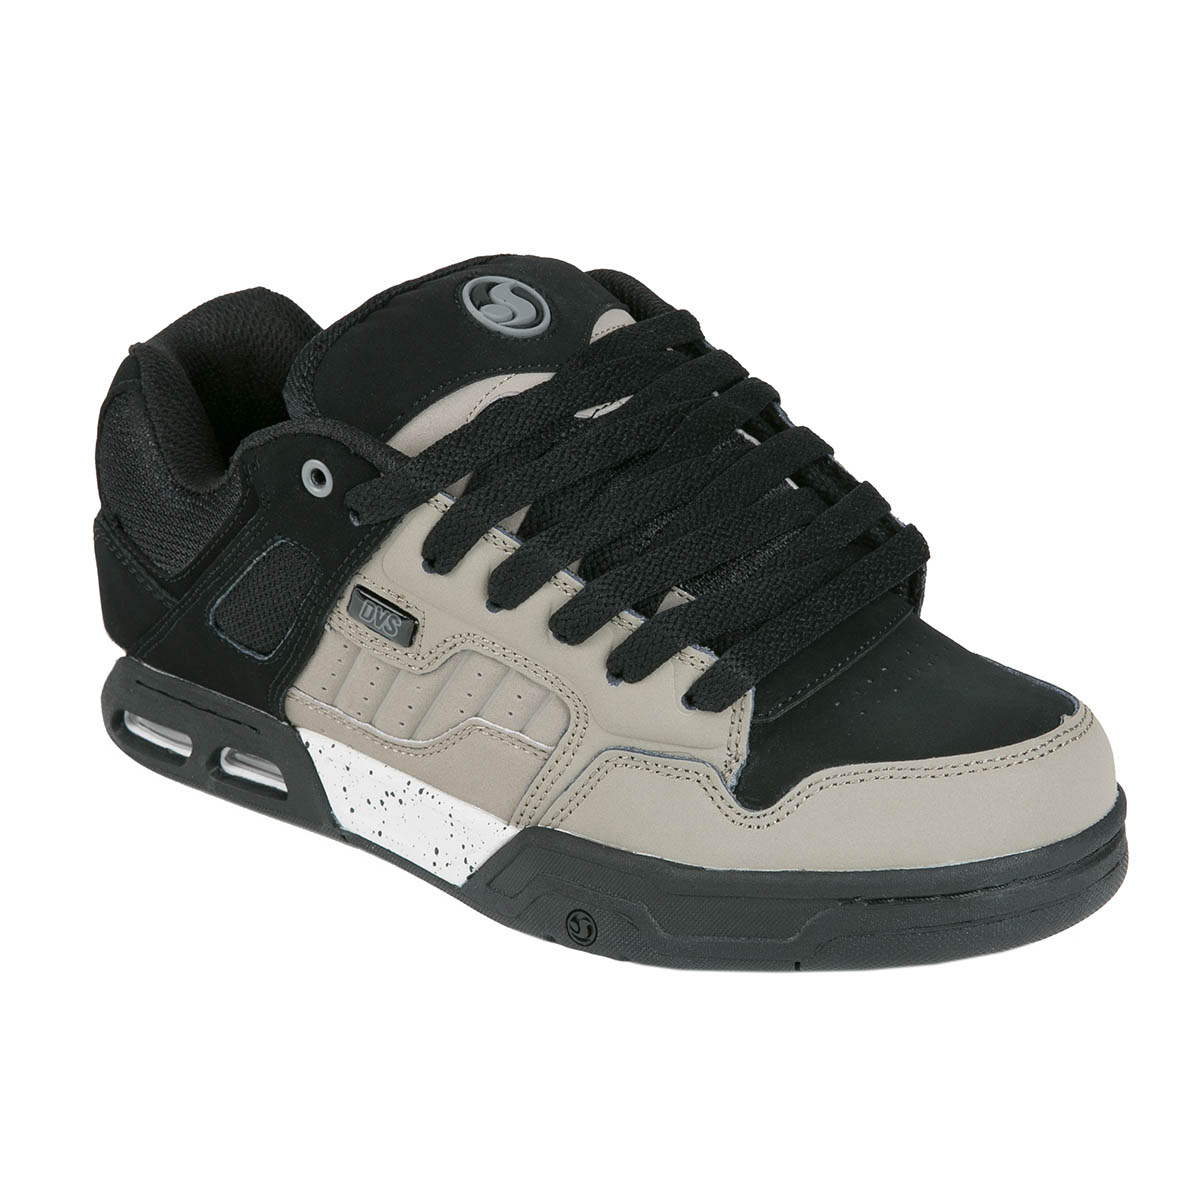 DVS Schuhe Enduro Heir Taupe Black Leather